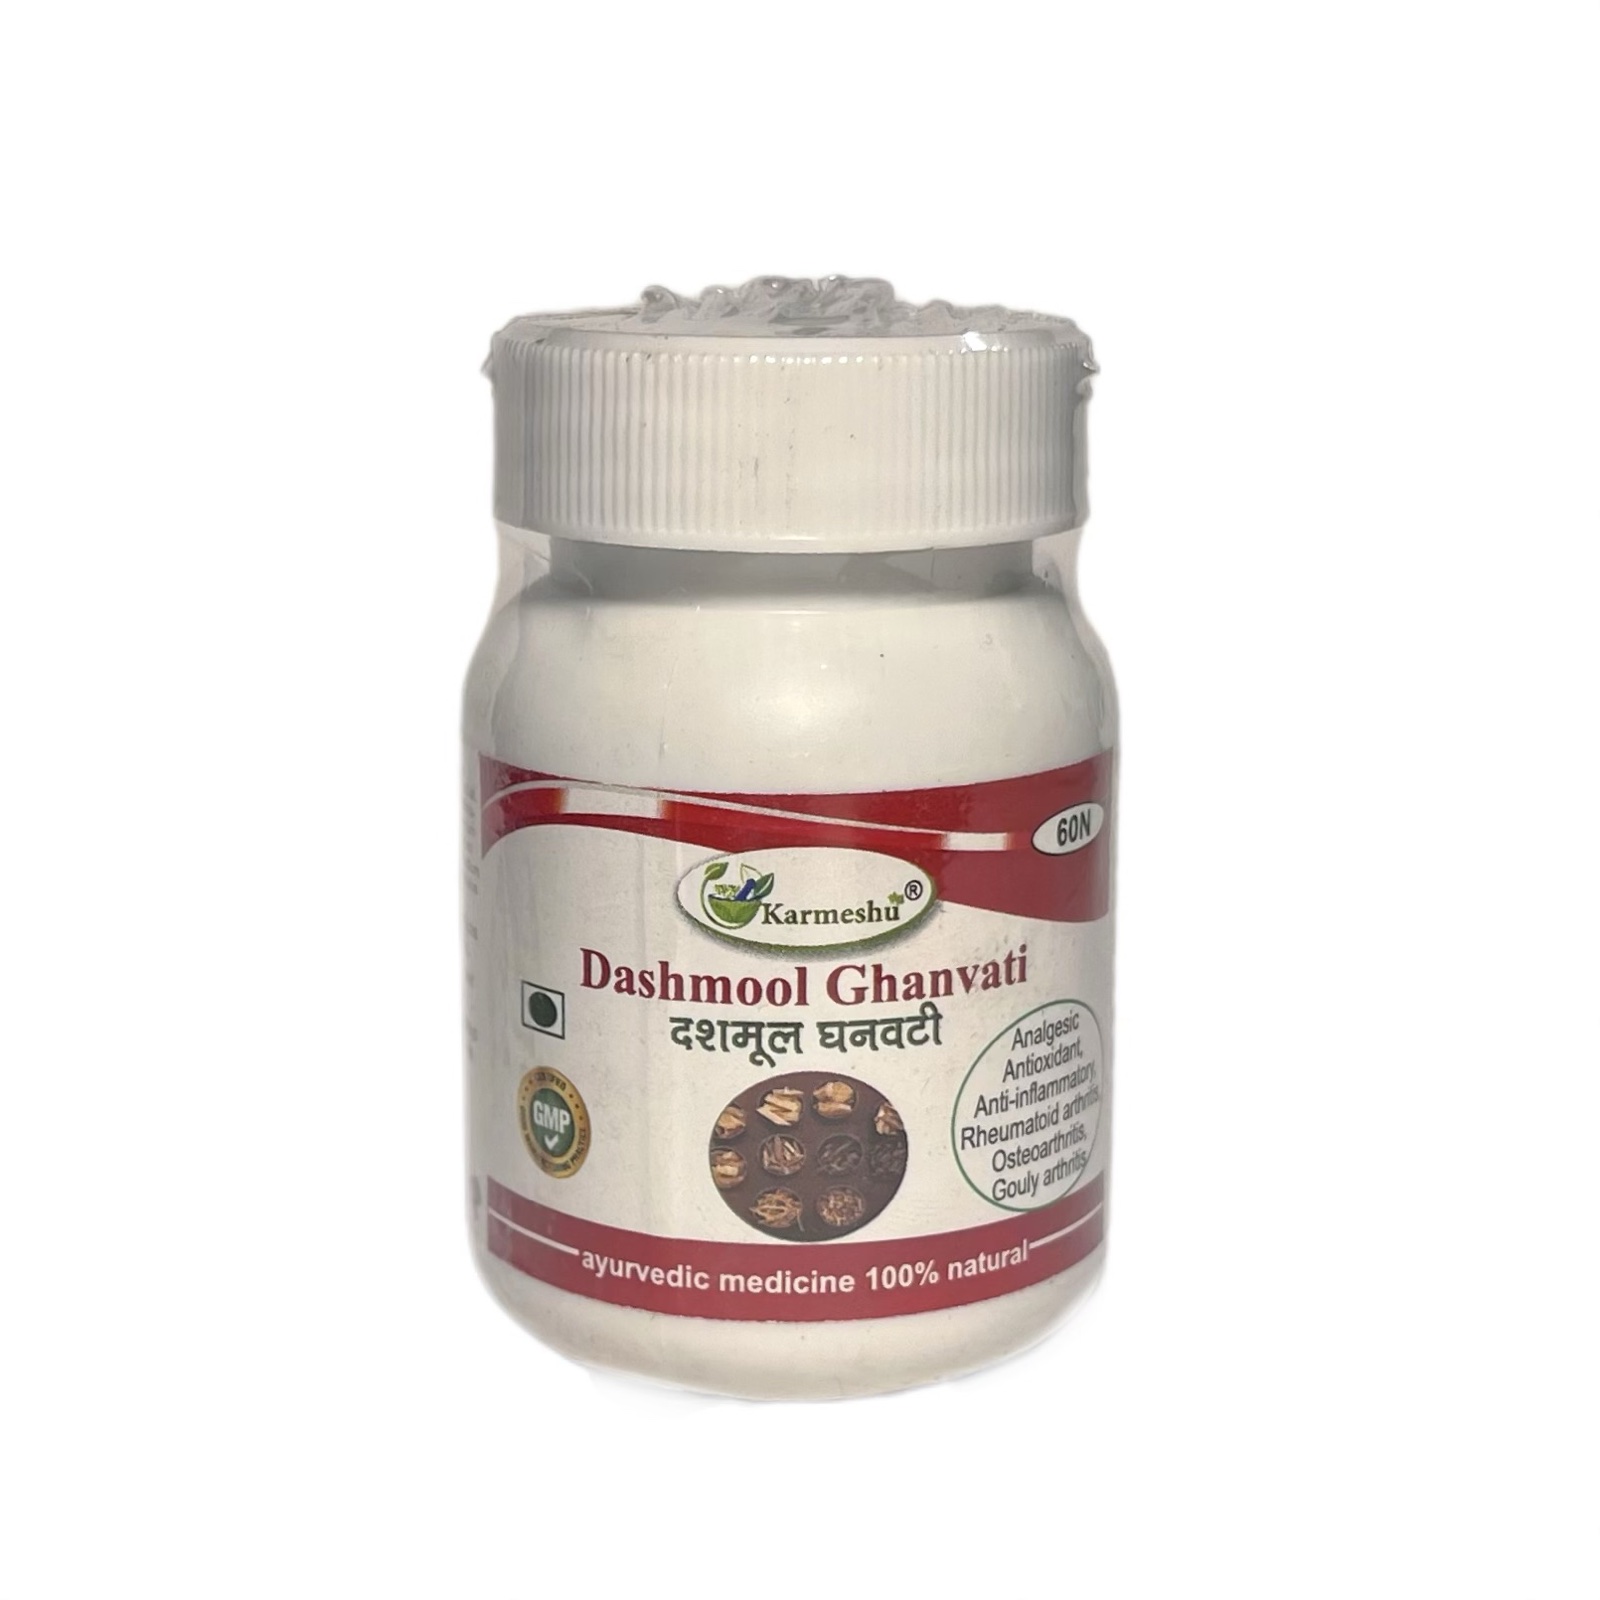 DASHMOOL GHANVATI, Karmeshu (ДАШАМУЛ ГХАНВАТИ, для комплексного очищения организма, Кармешу), 60 таб. по 500 мг.